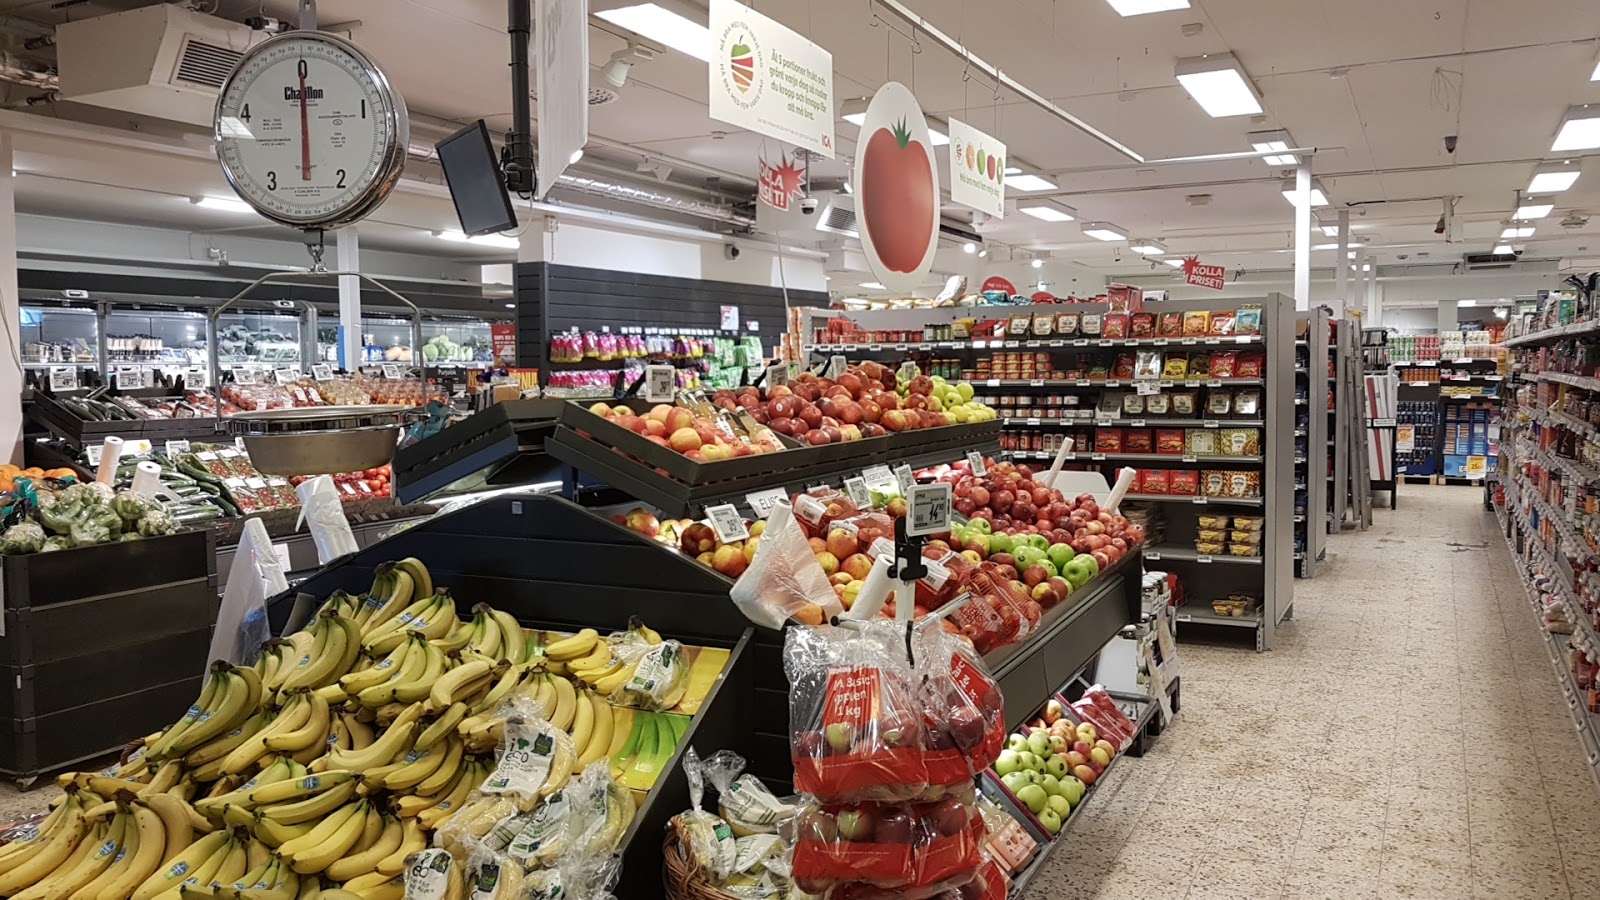 ICA Supermarket Karlsborg